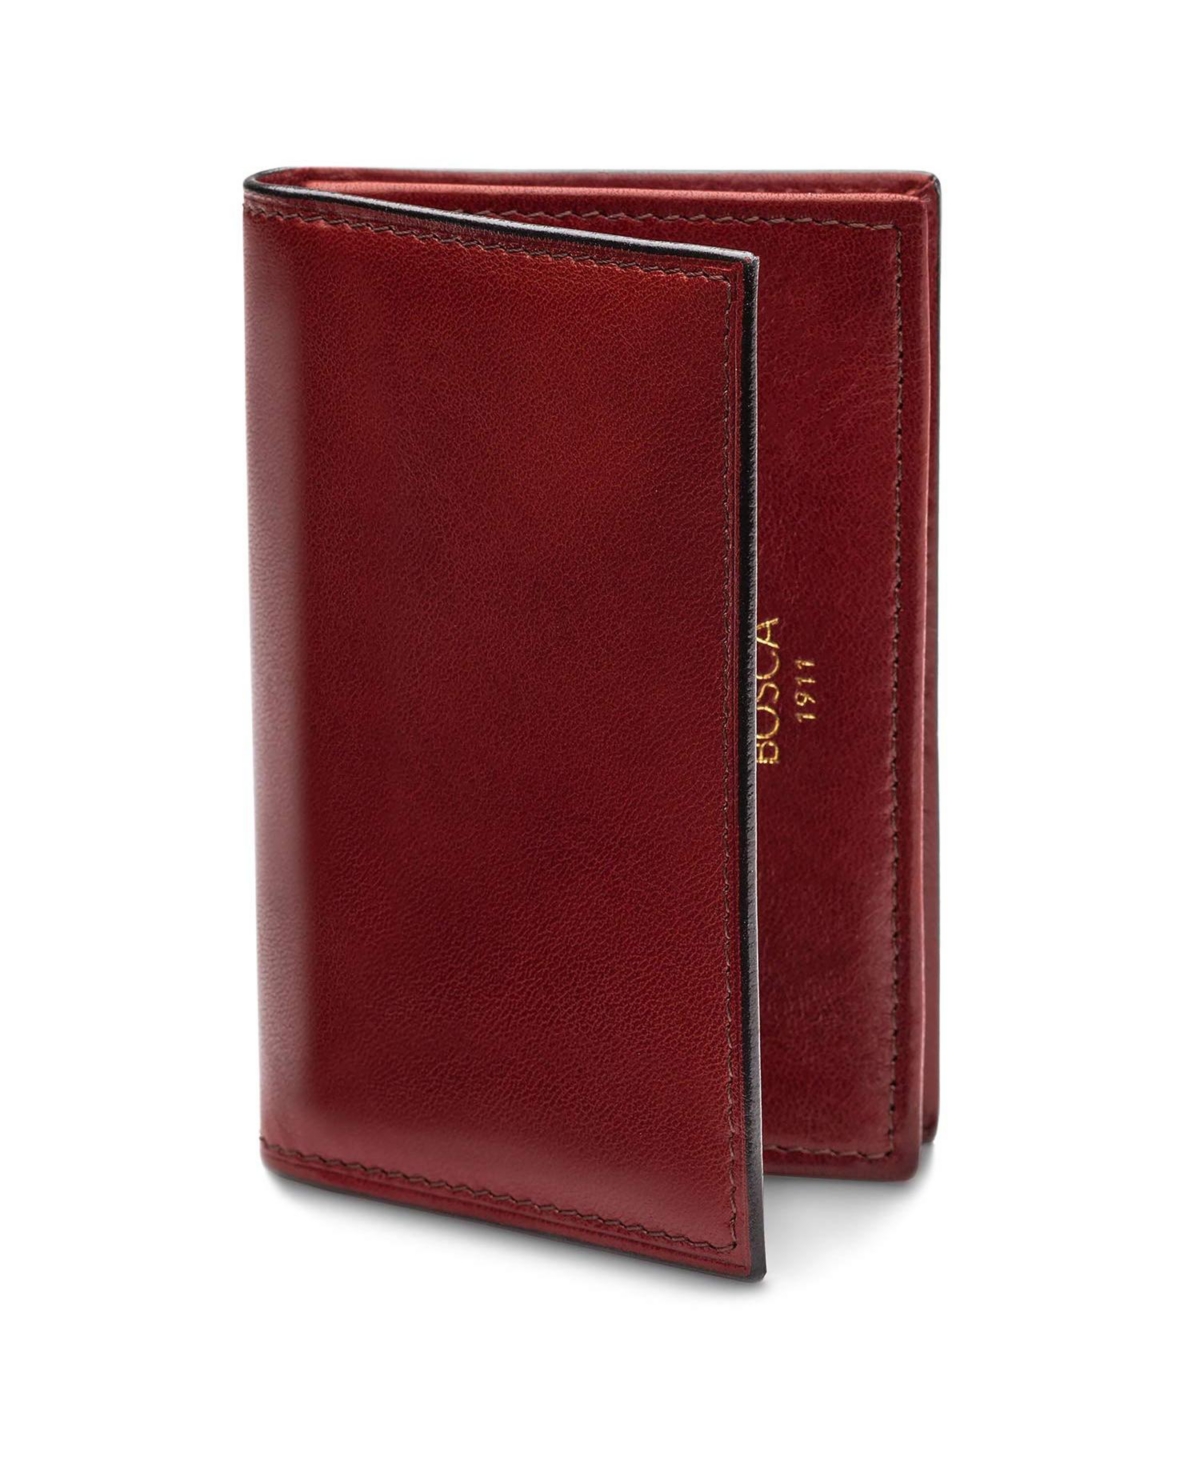 Men's Wallet, Old Leather Full Gusset 2-Pocket Card Case Wallet with I.d. Window - Dark brown